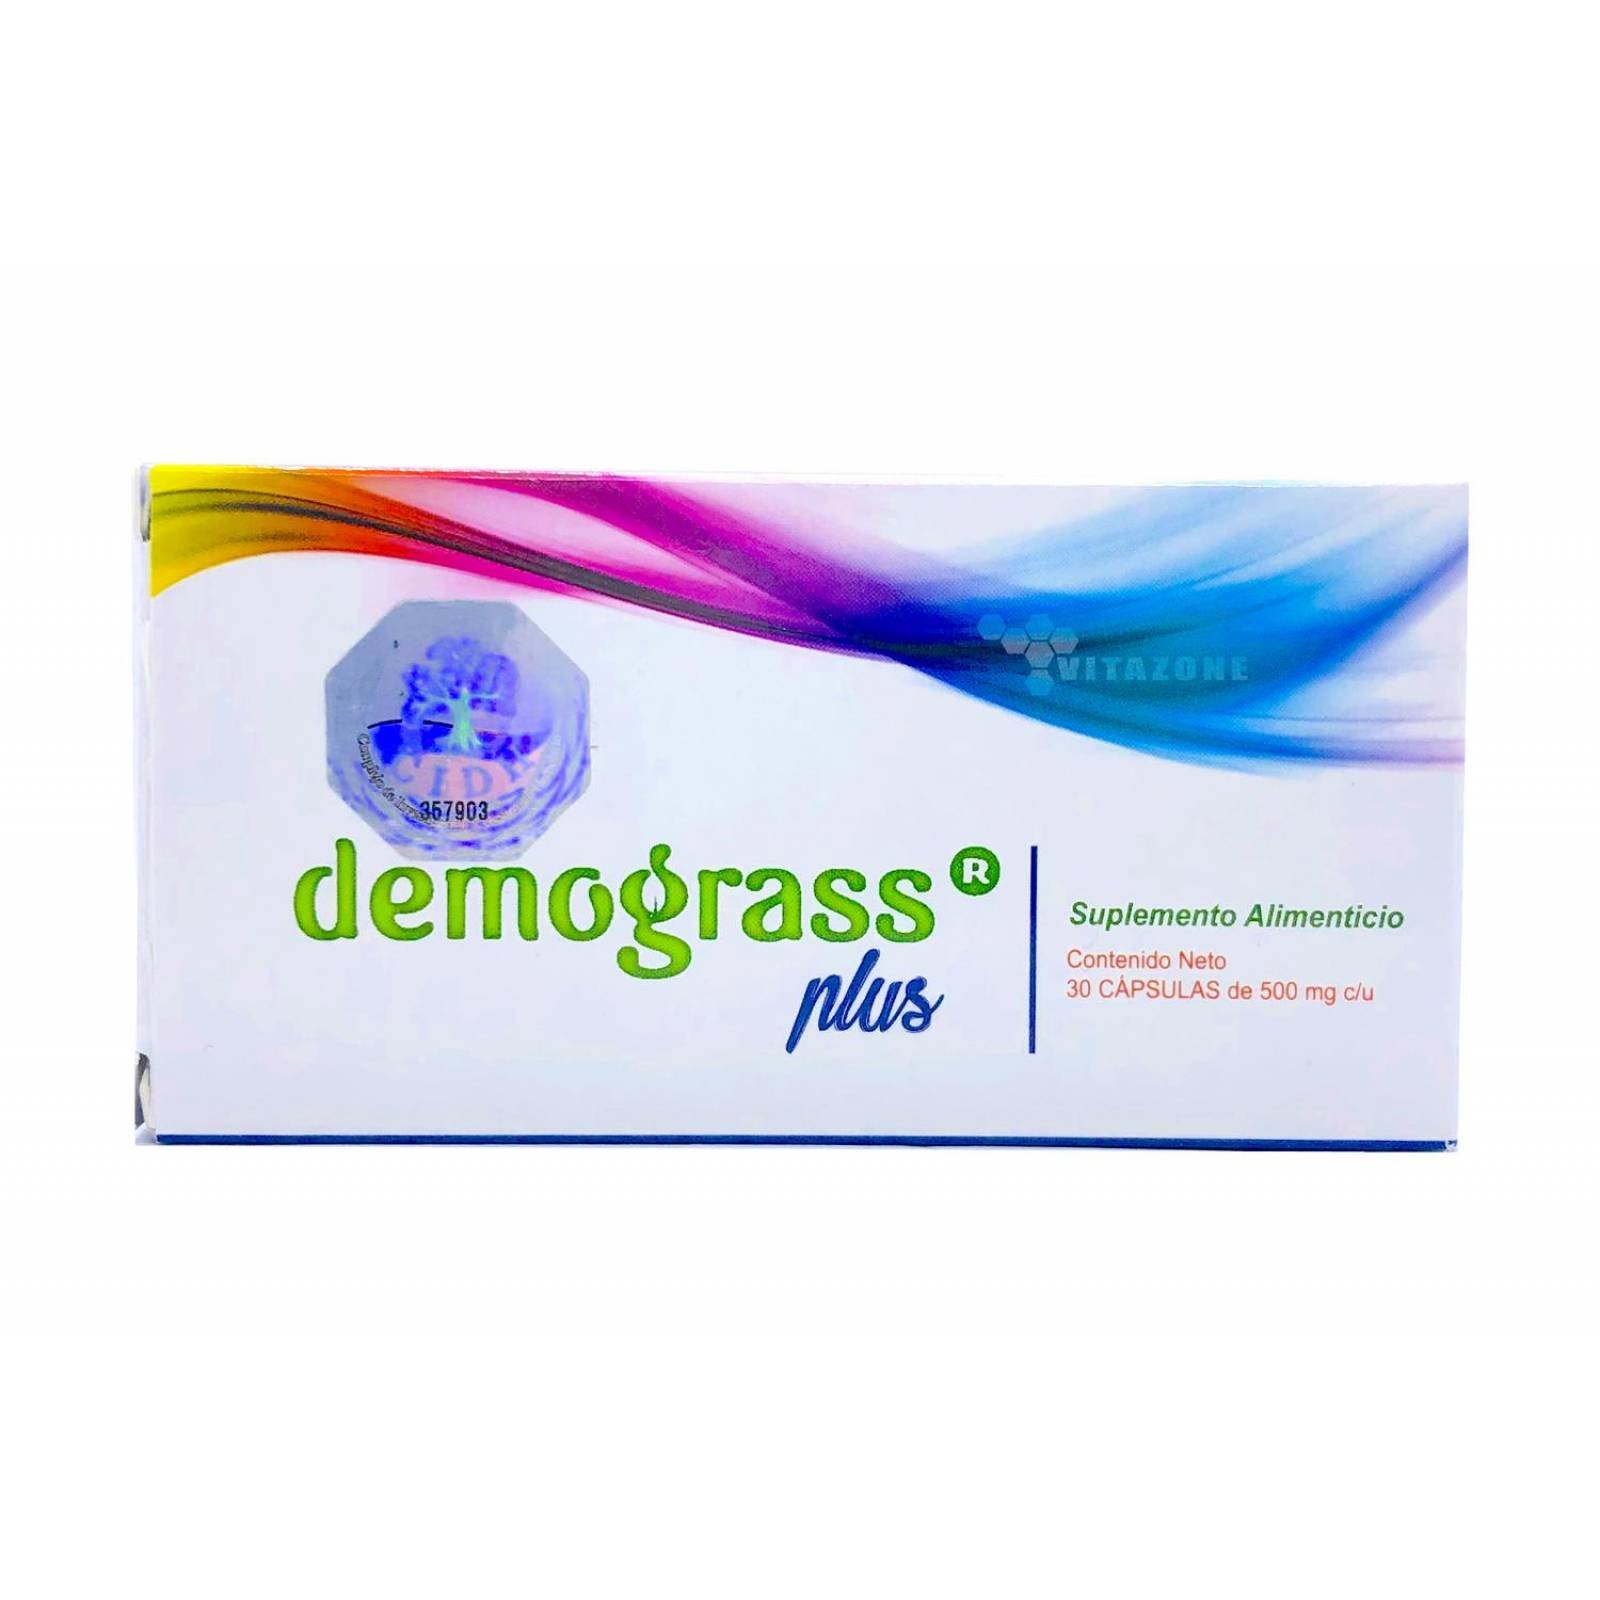 Demograss Clásico y demograss Plus 30 cápsulas c/u (2 Cajas) 